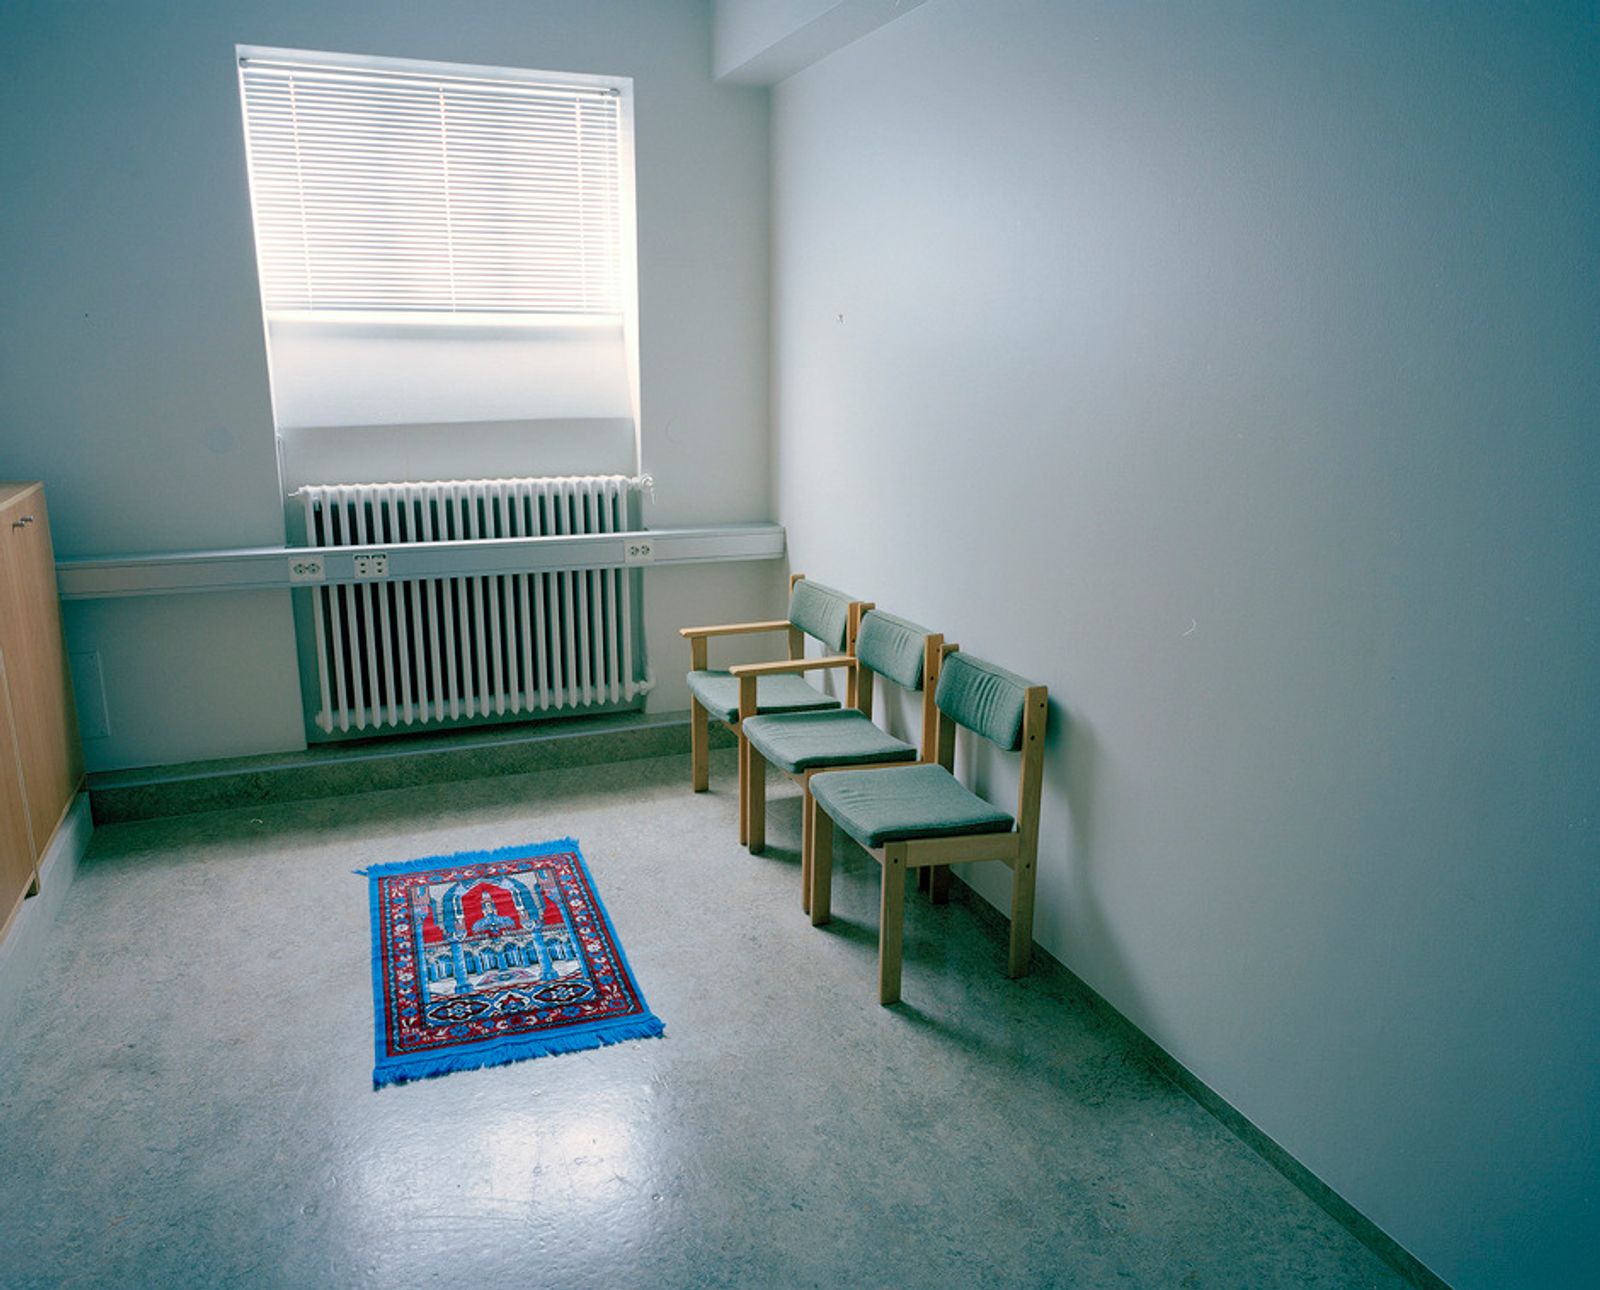 © Cian Oba-smith - Multifaith prayer room in Iceland University